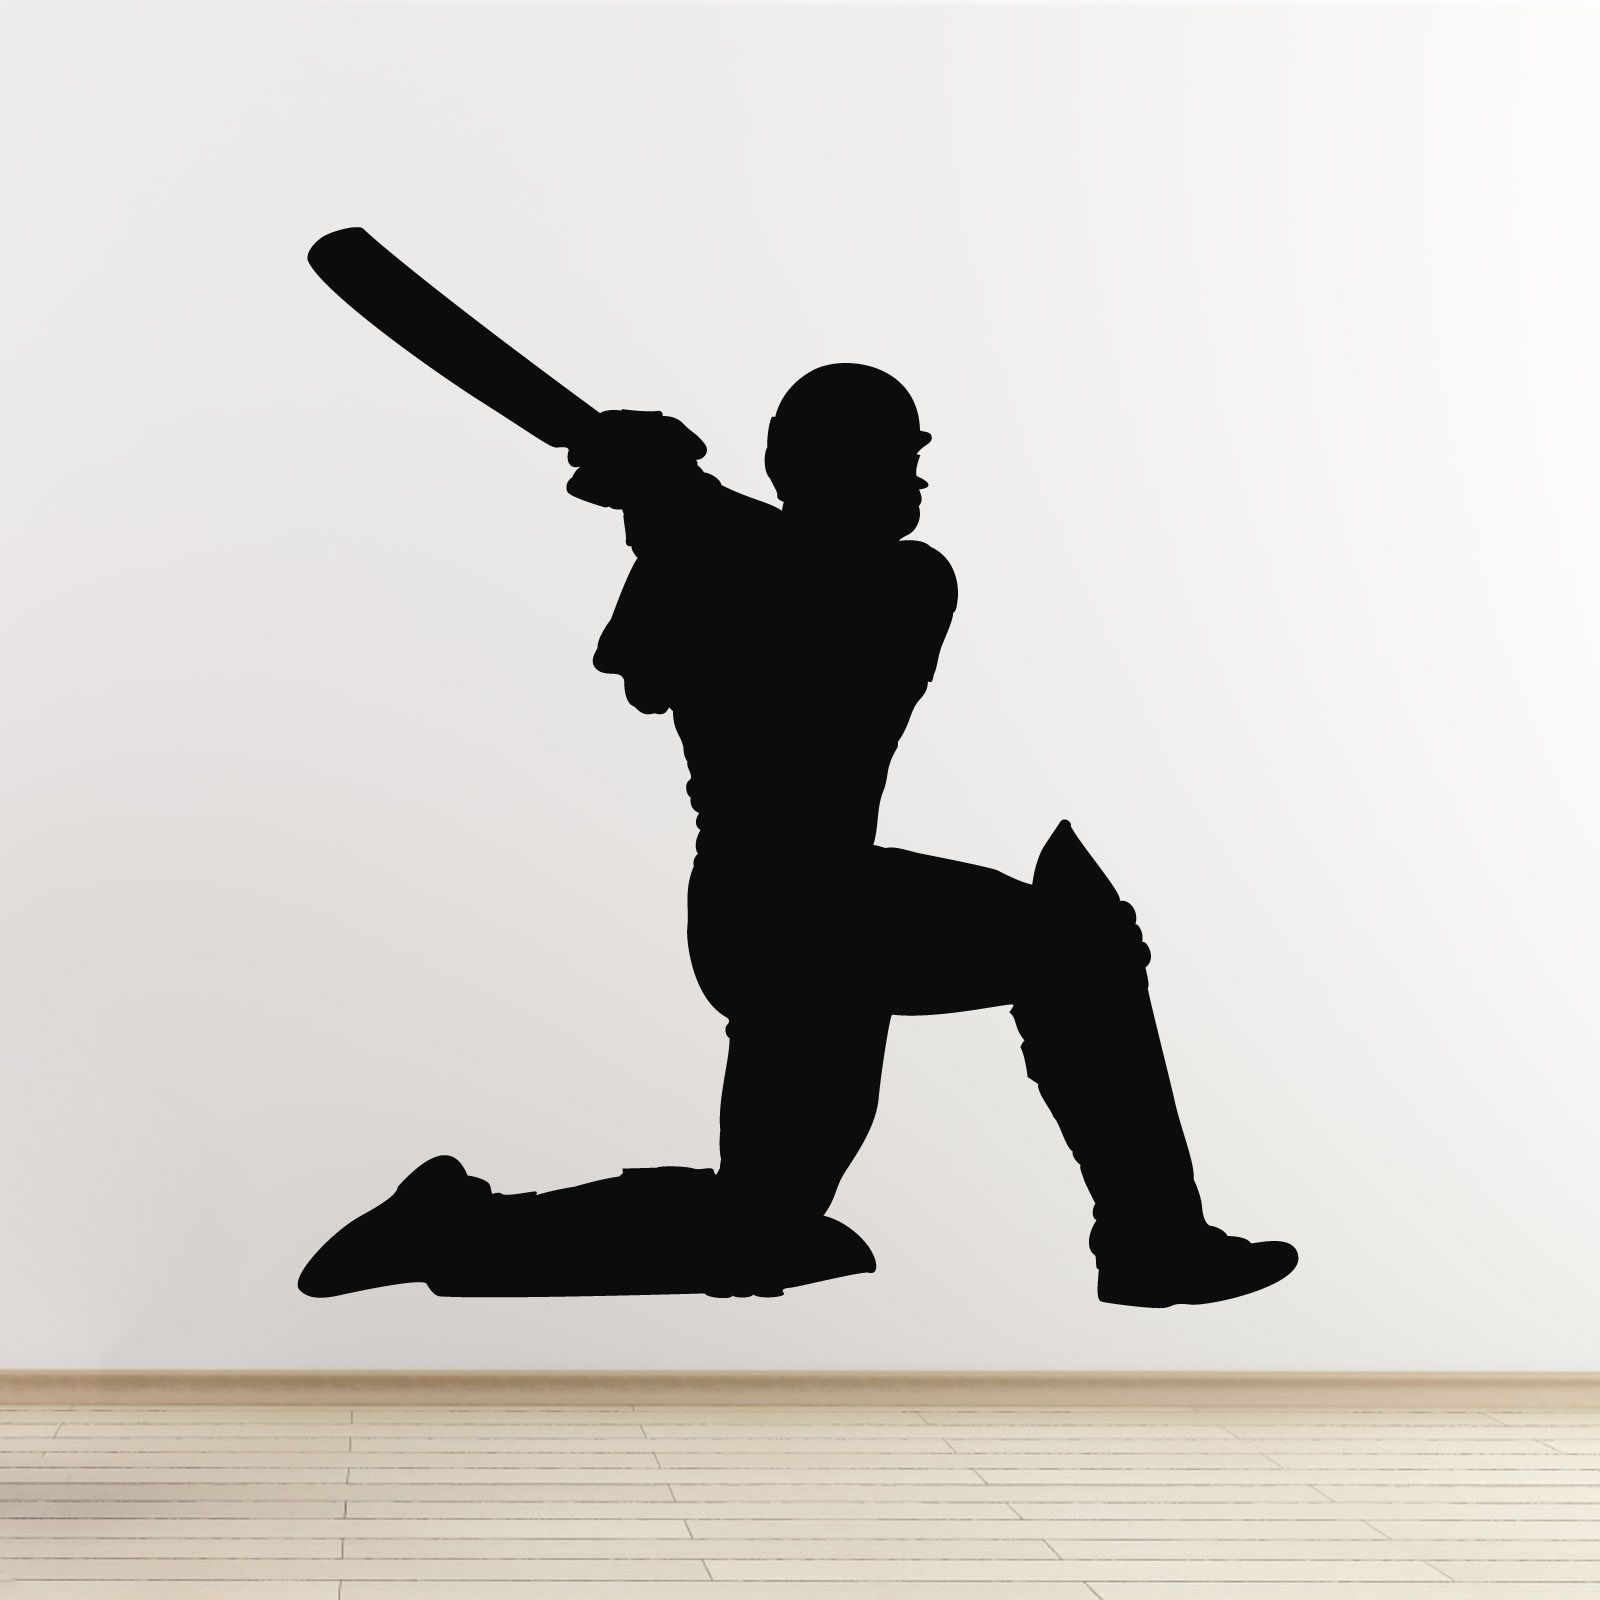 Cricket Wall Sticker